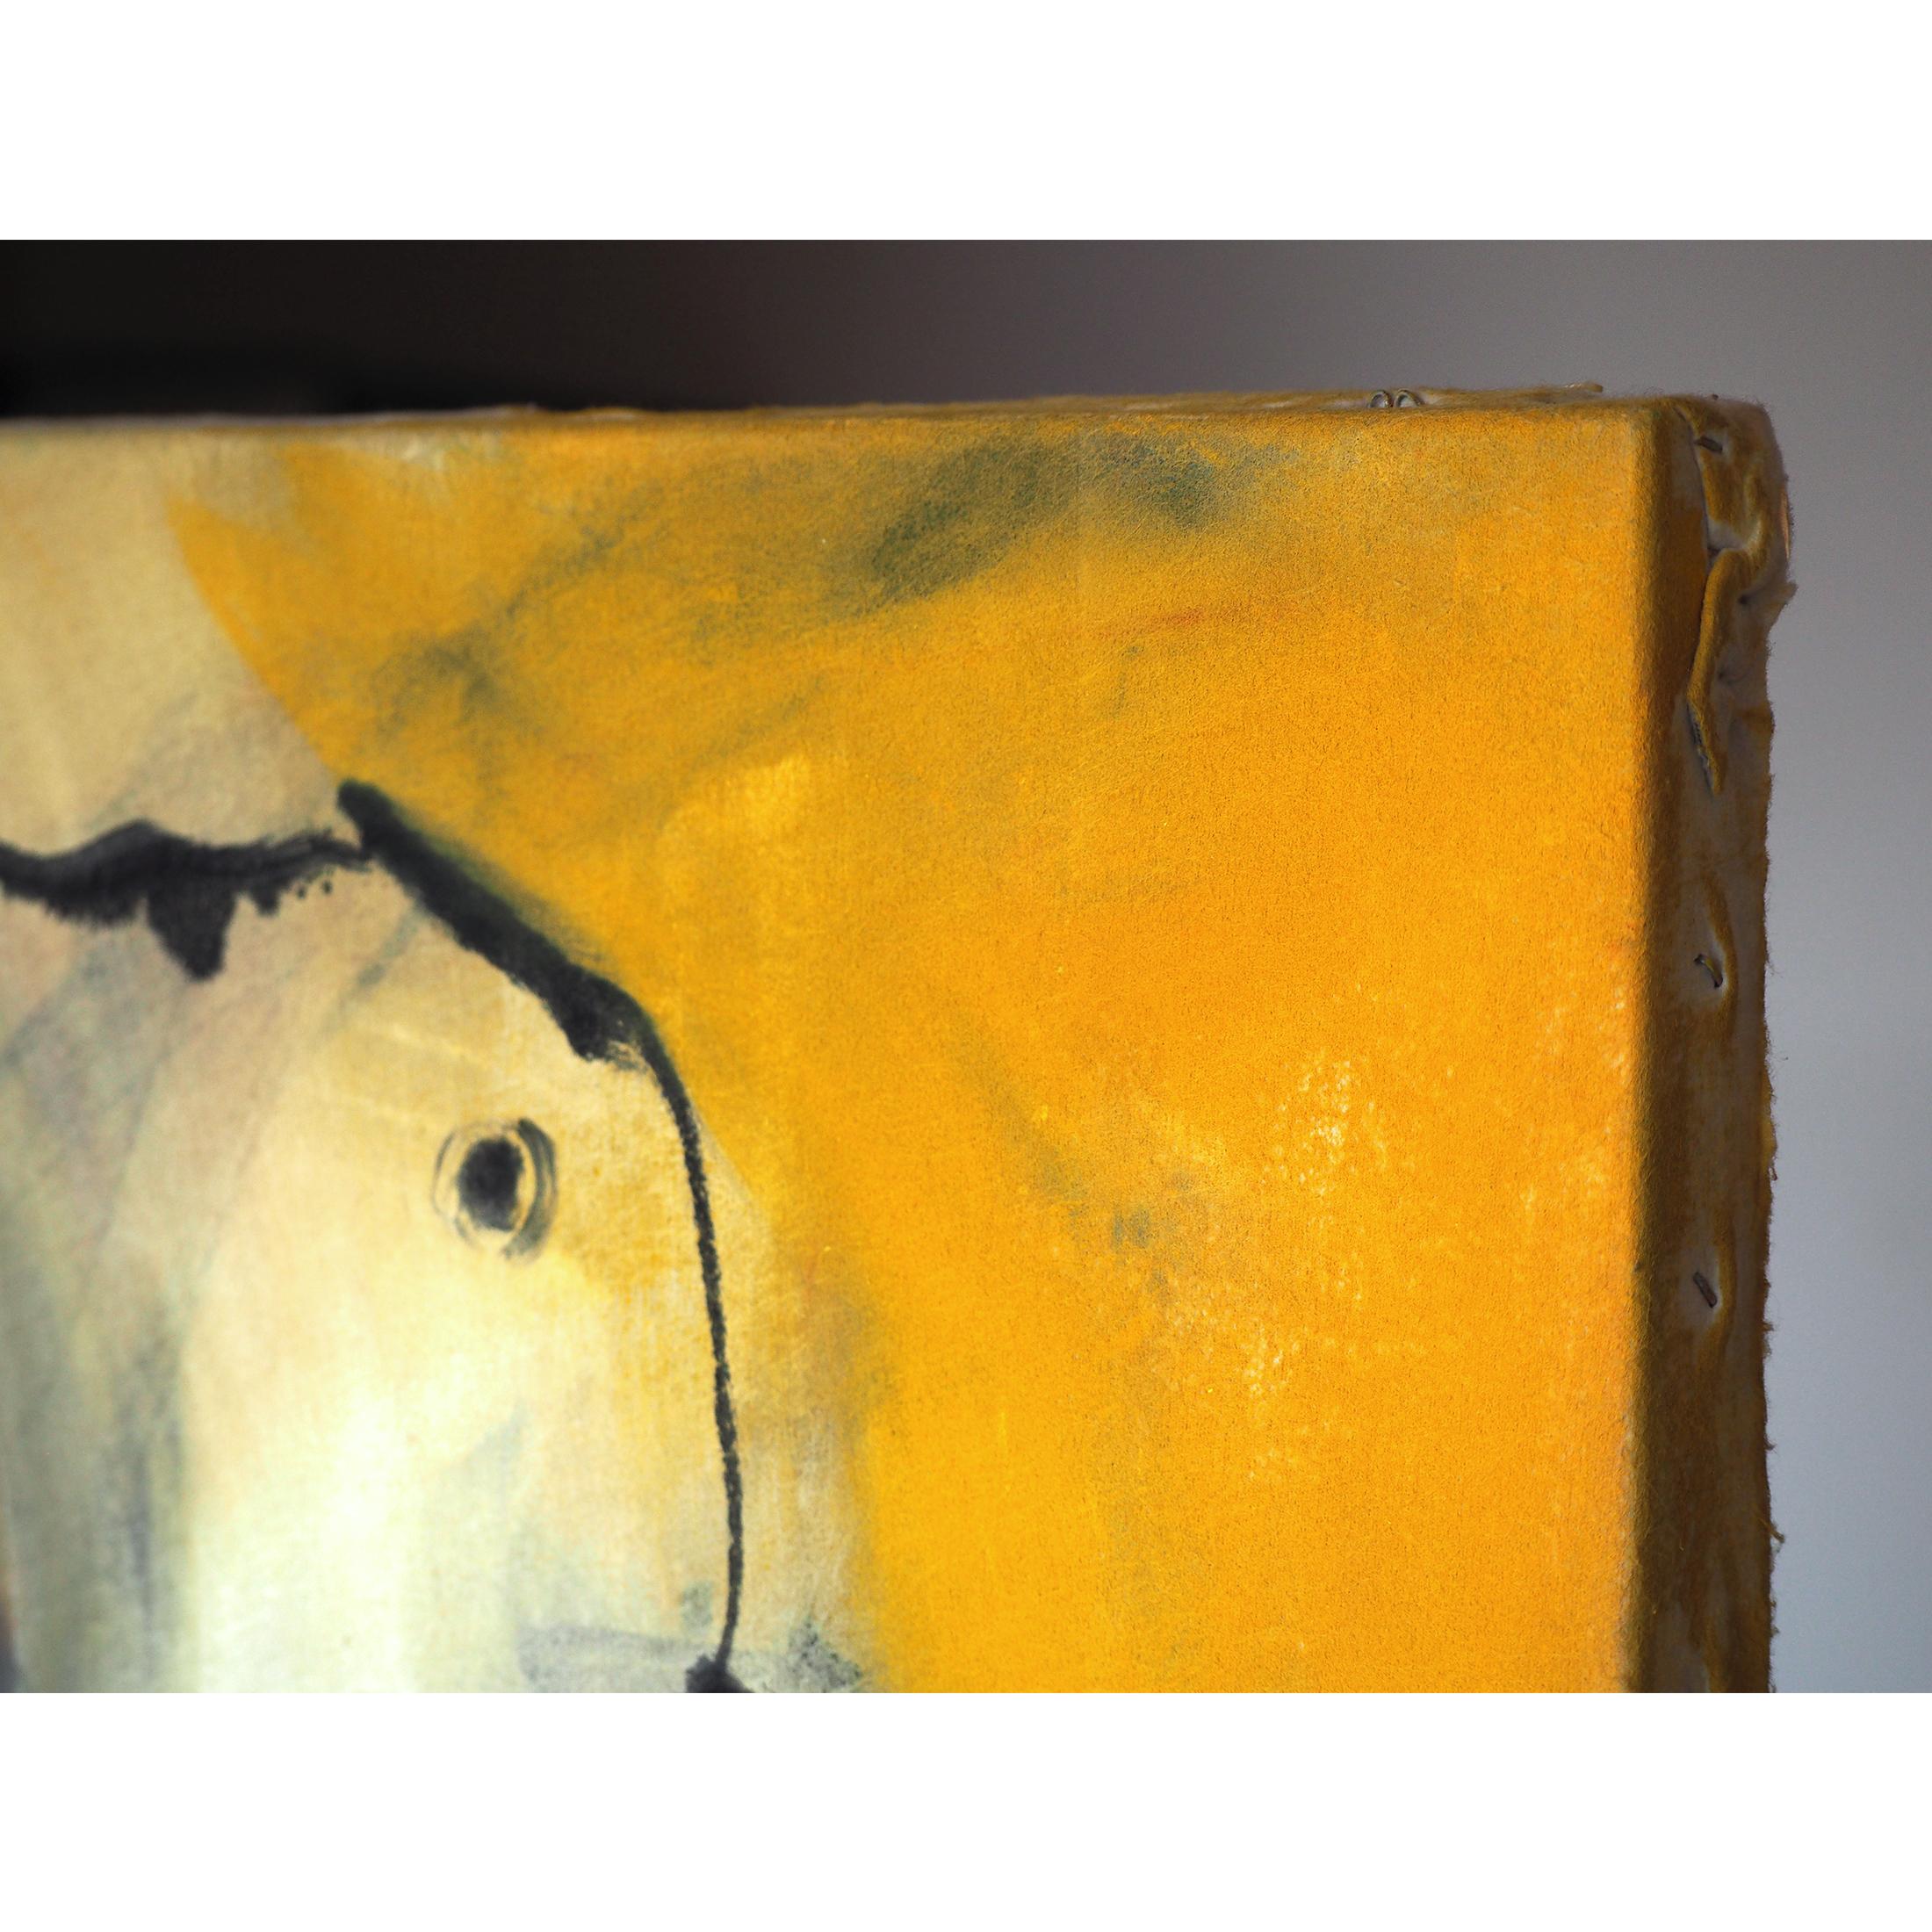 Francky Criquet - NOT TITLE /yellow - oil on canvas - 80x133cm For Sale 3